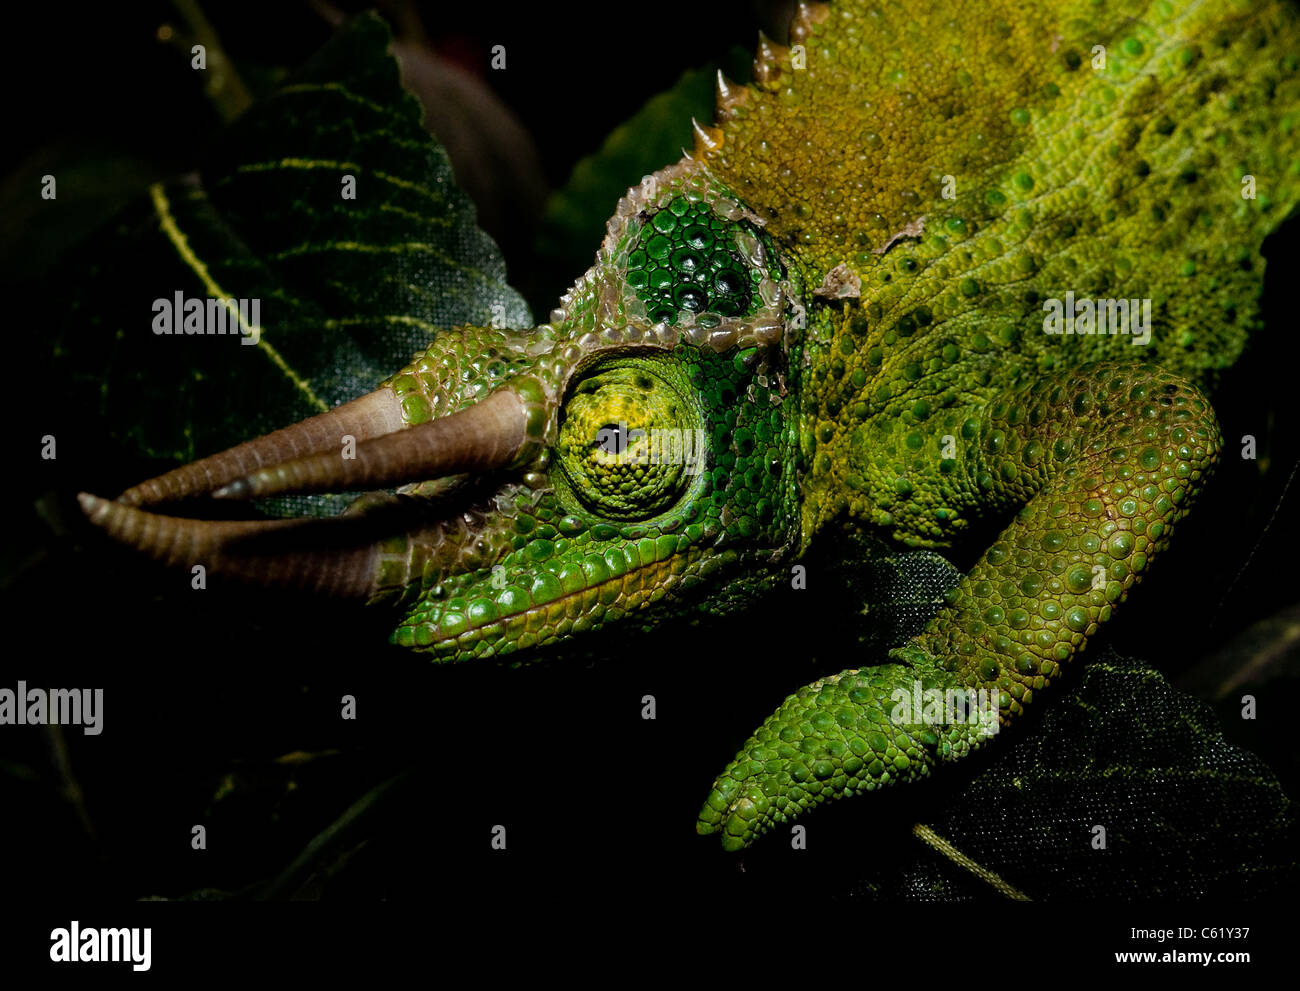 A Jackson's Chameleon on a leaf Stock Photo